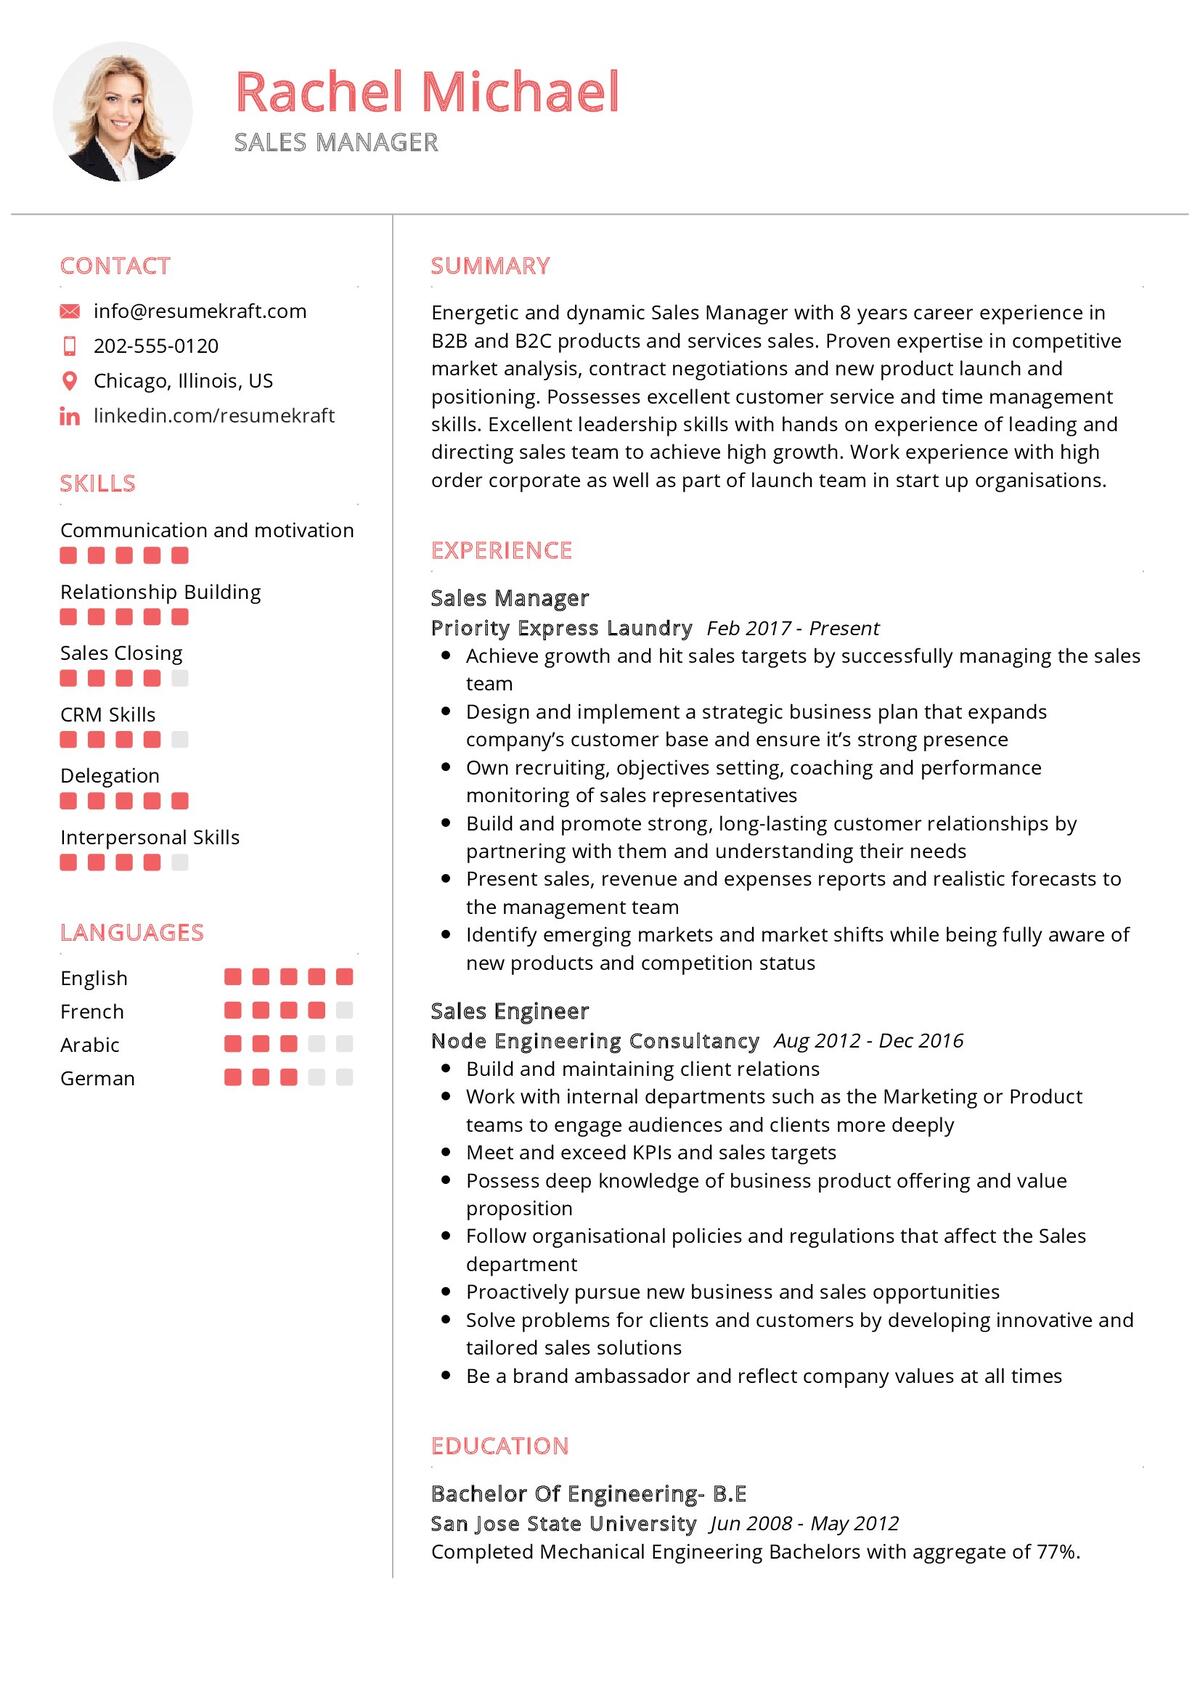 Sales Manager CV Sample in 2024 ResumeKraft